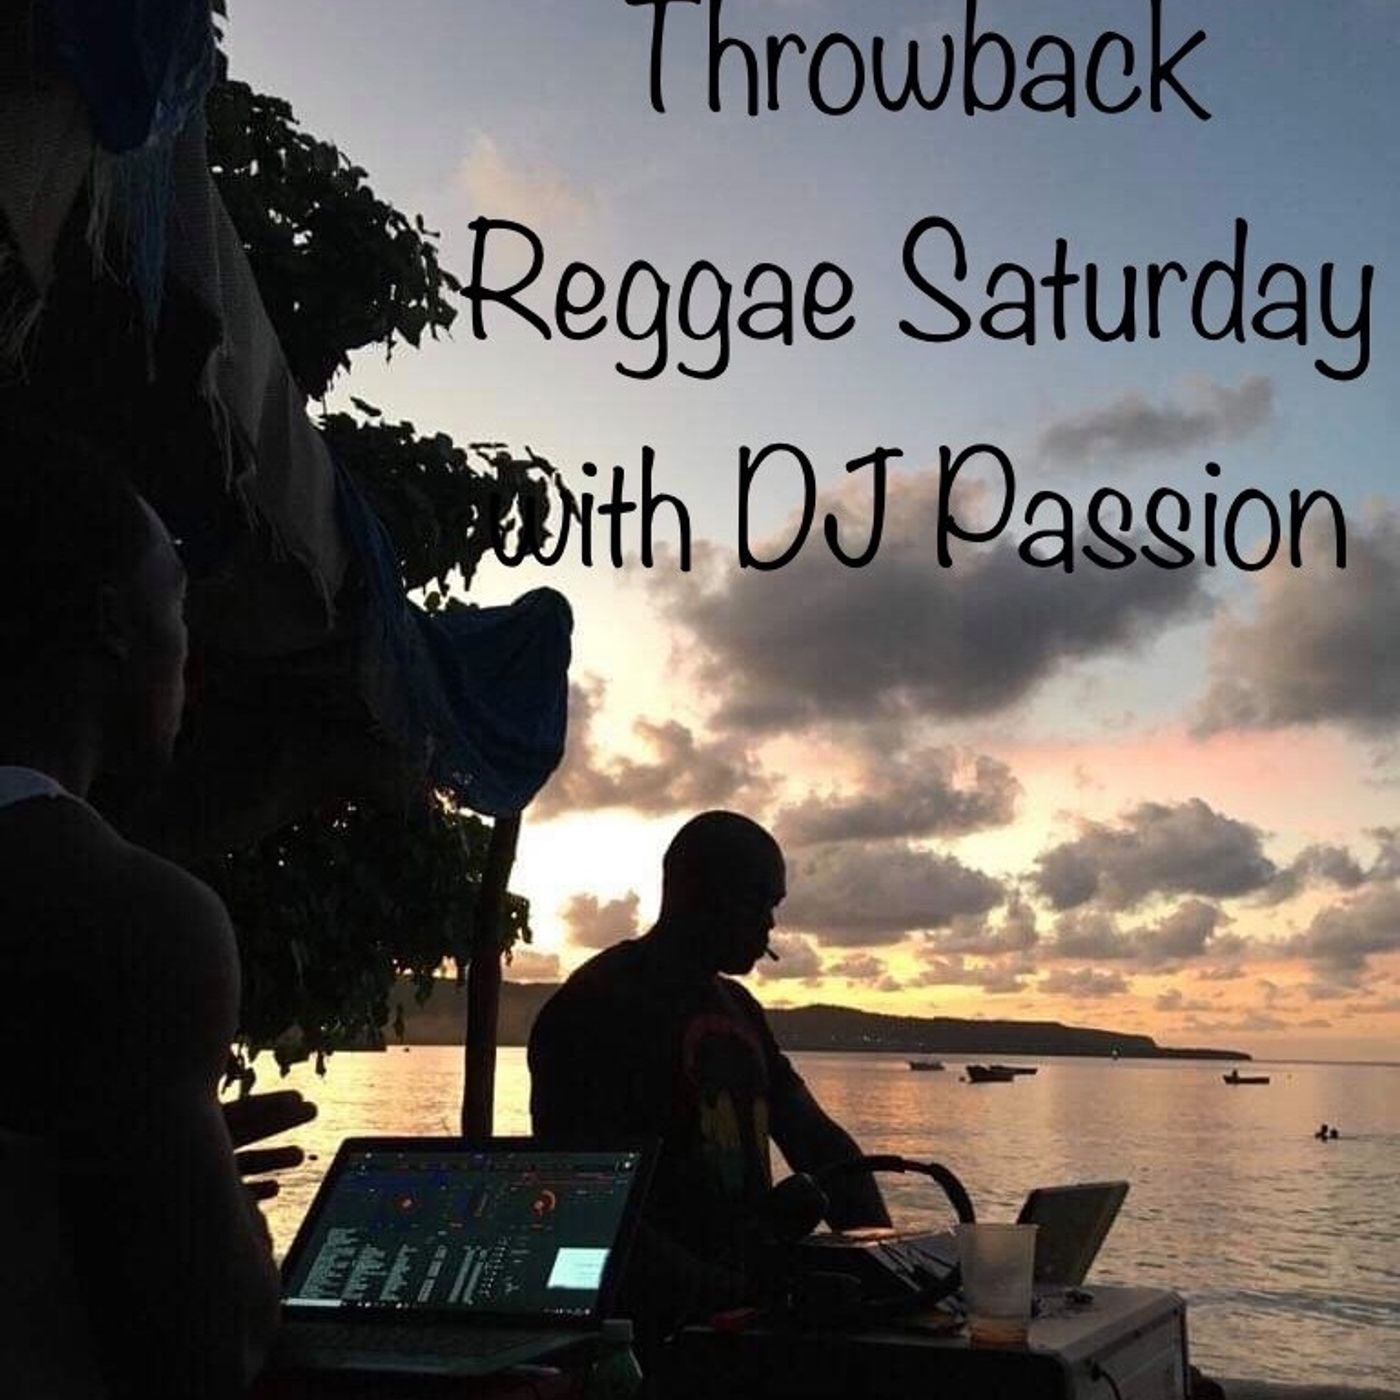 Throwback Reggae Saturday with Dj passion